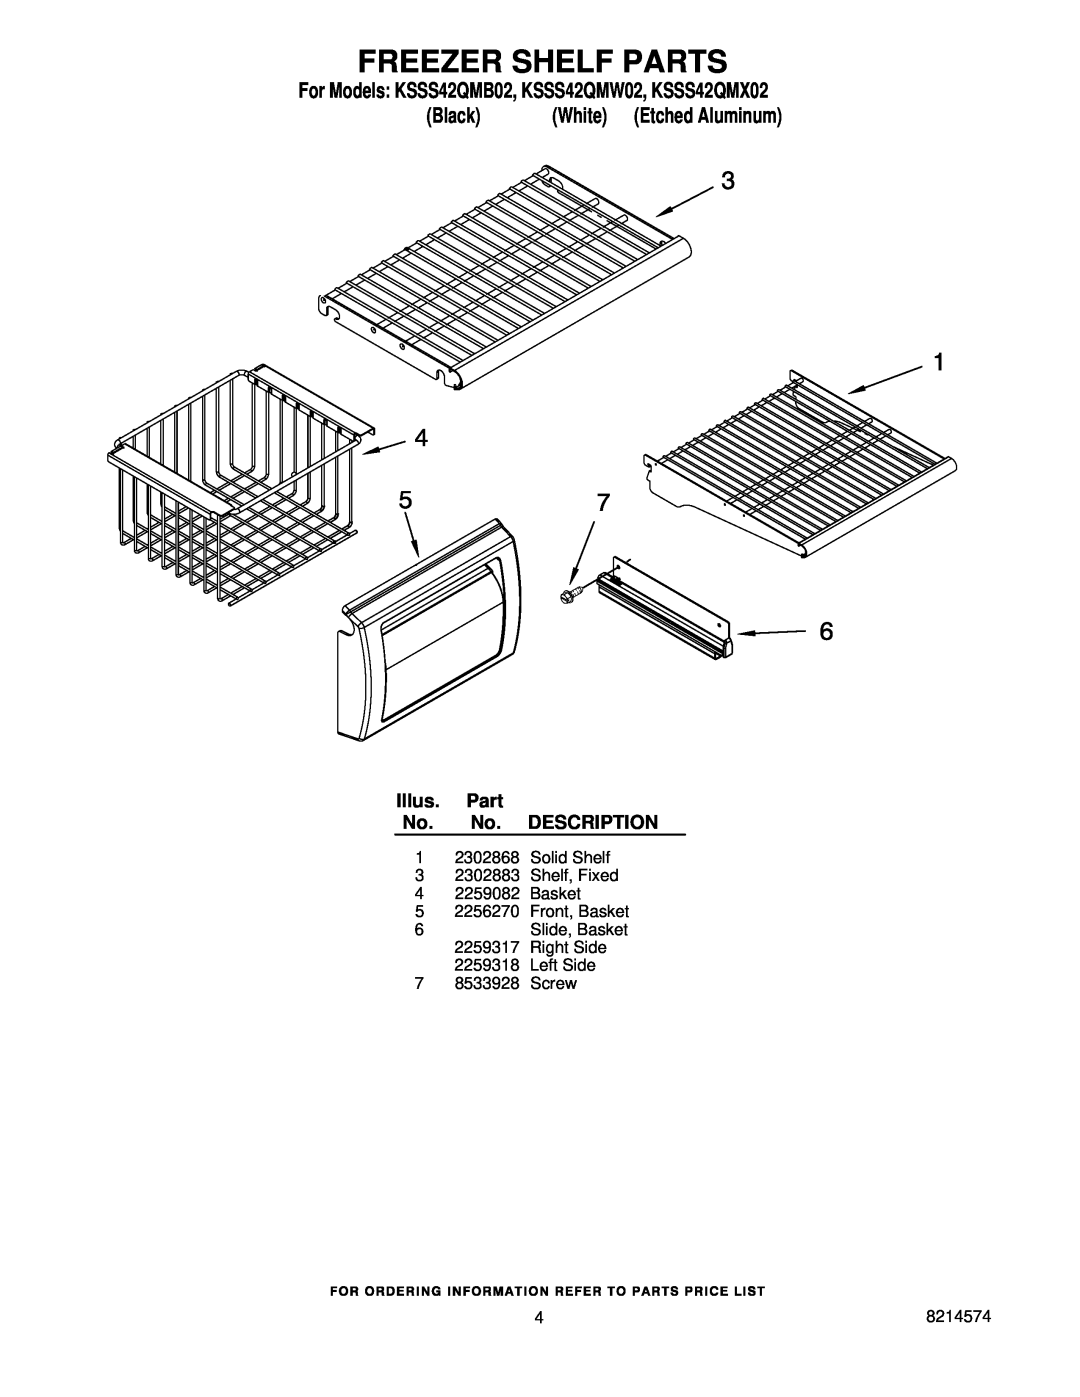 KitchenAid manual Freezer Shelf Parts, For Models KSSS42QMB02, KSSS42QMW02, KSSS42QMX02, Black, White Etched Aluminum 